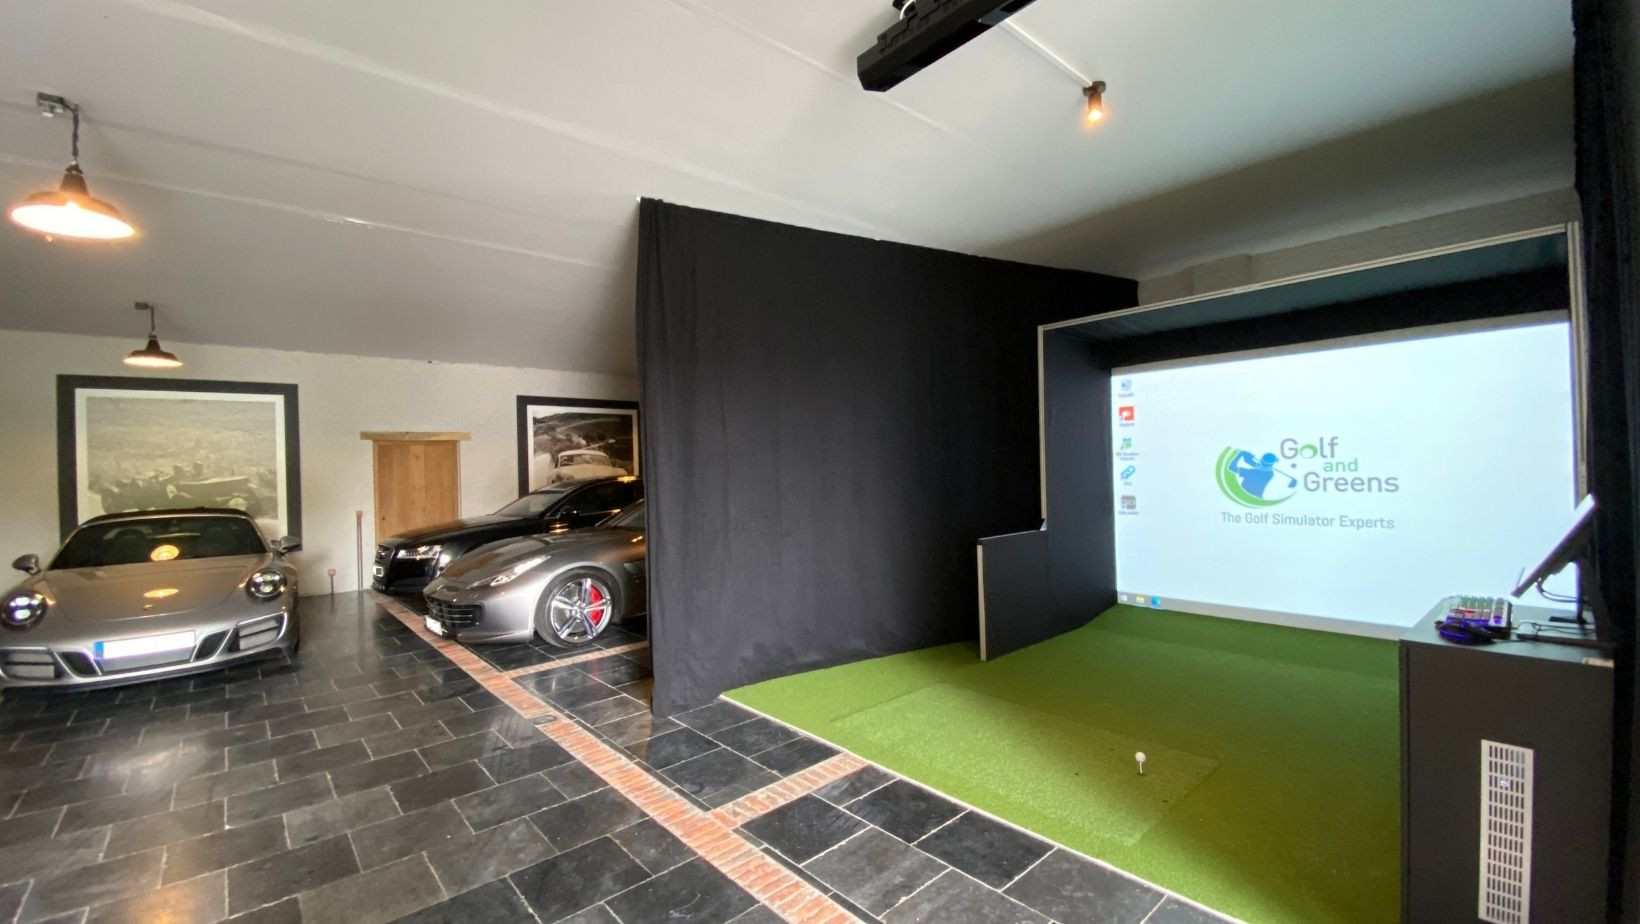 Simulateur de golf - Brabant flamand (BE)